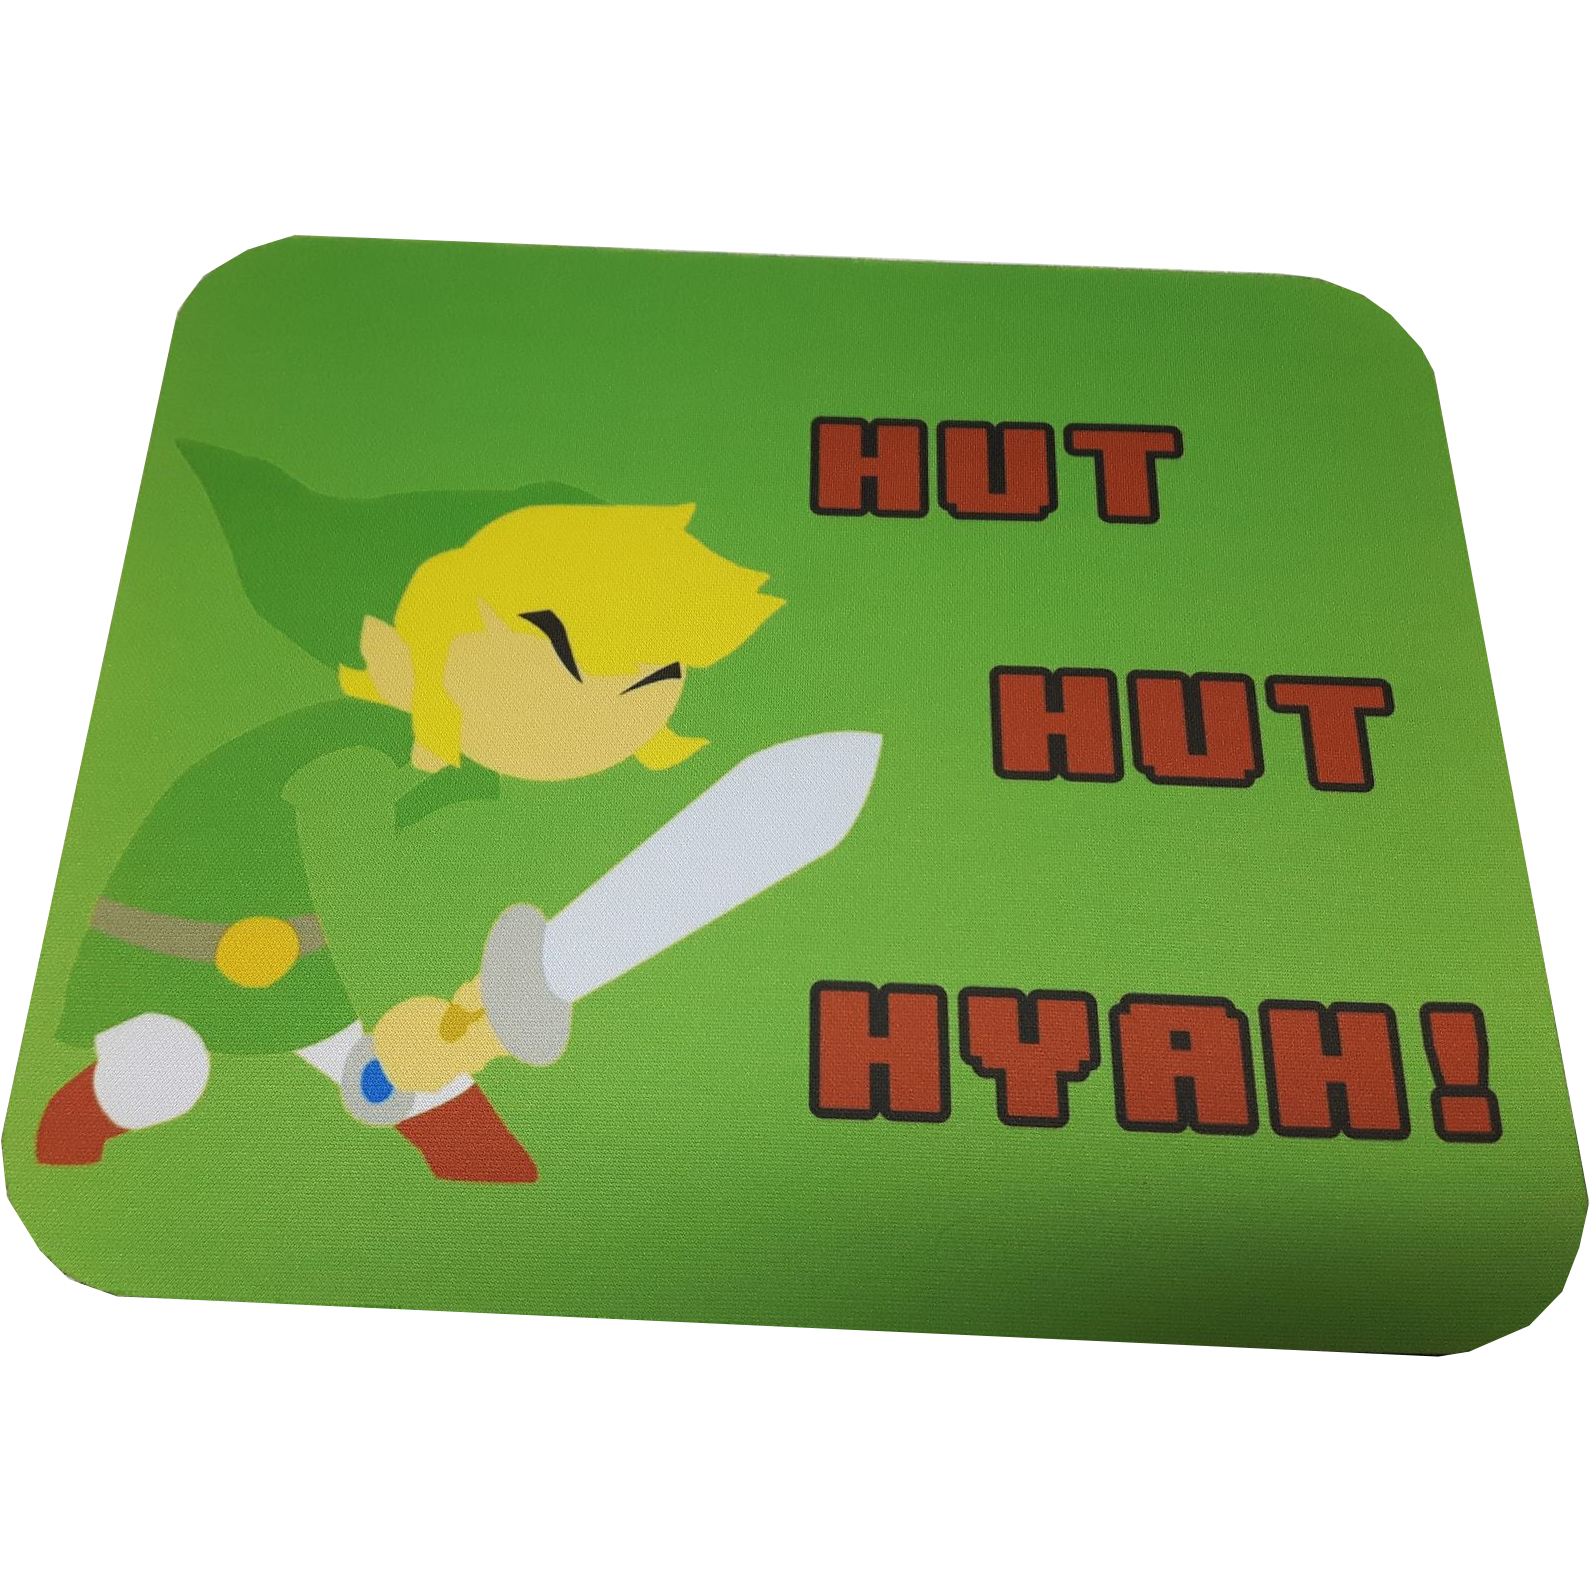 Mouse Pad - Link - Hut Hut Hyah!